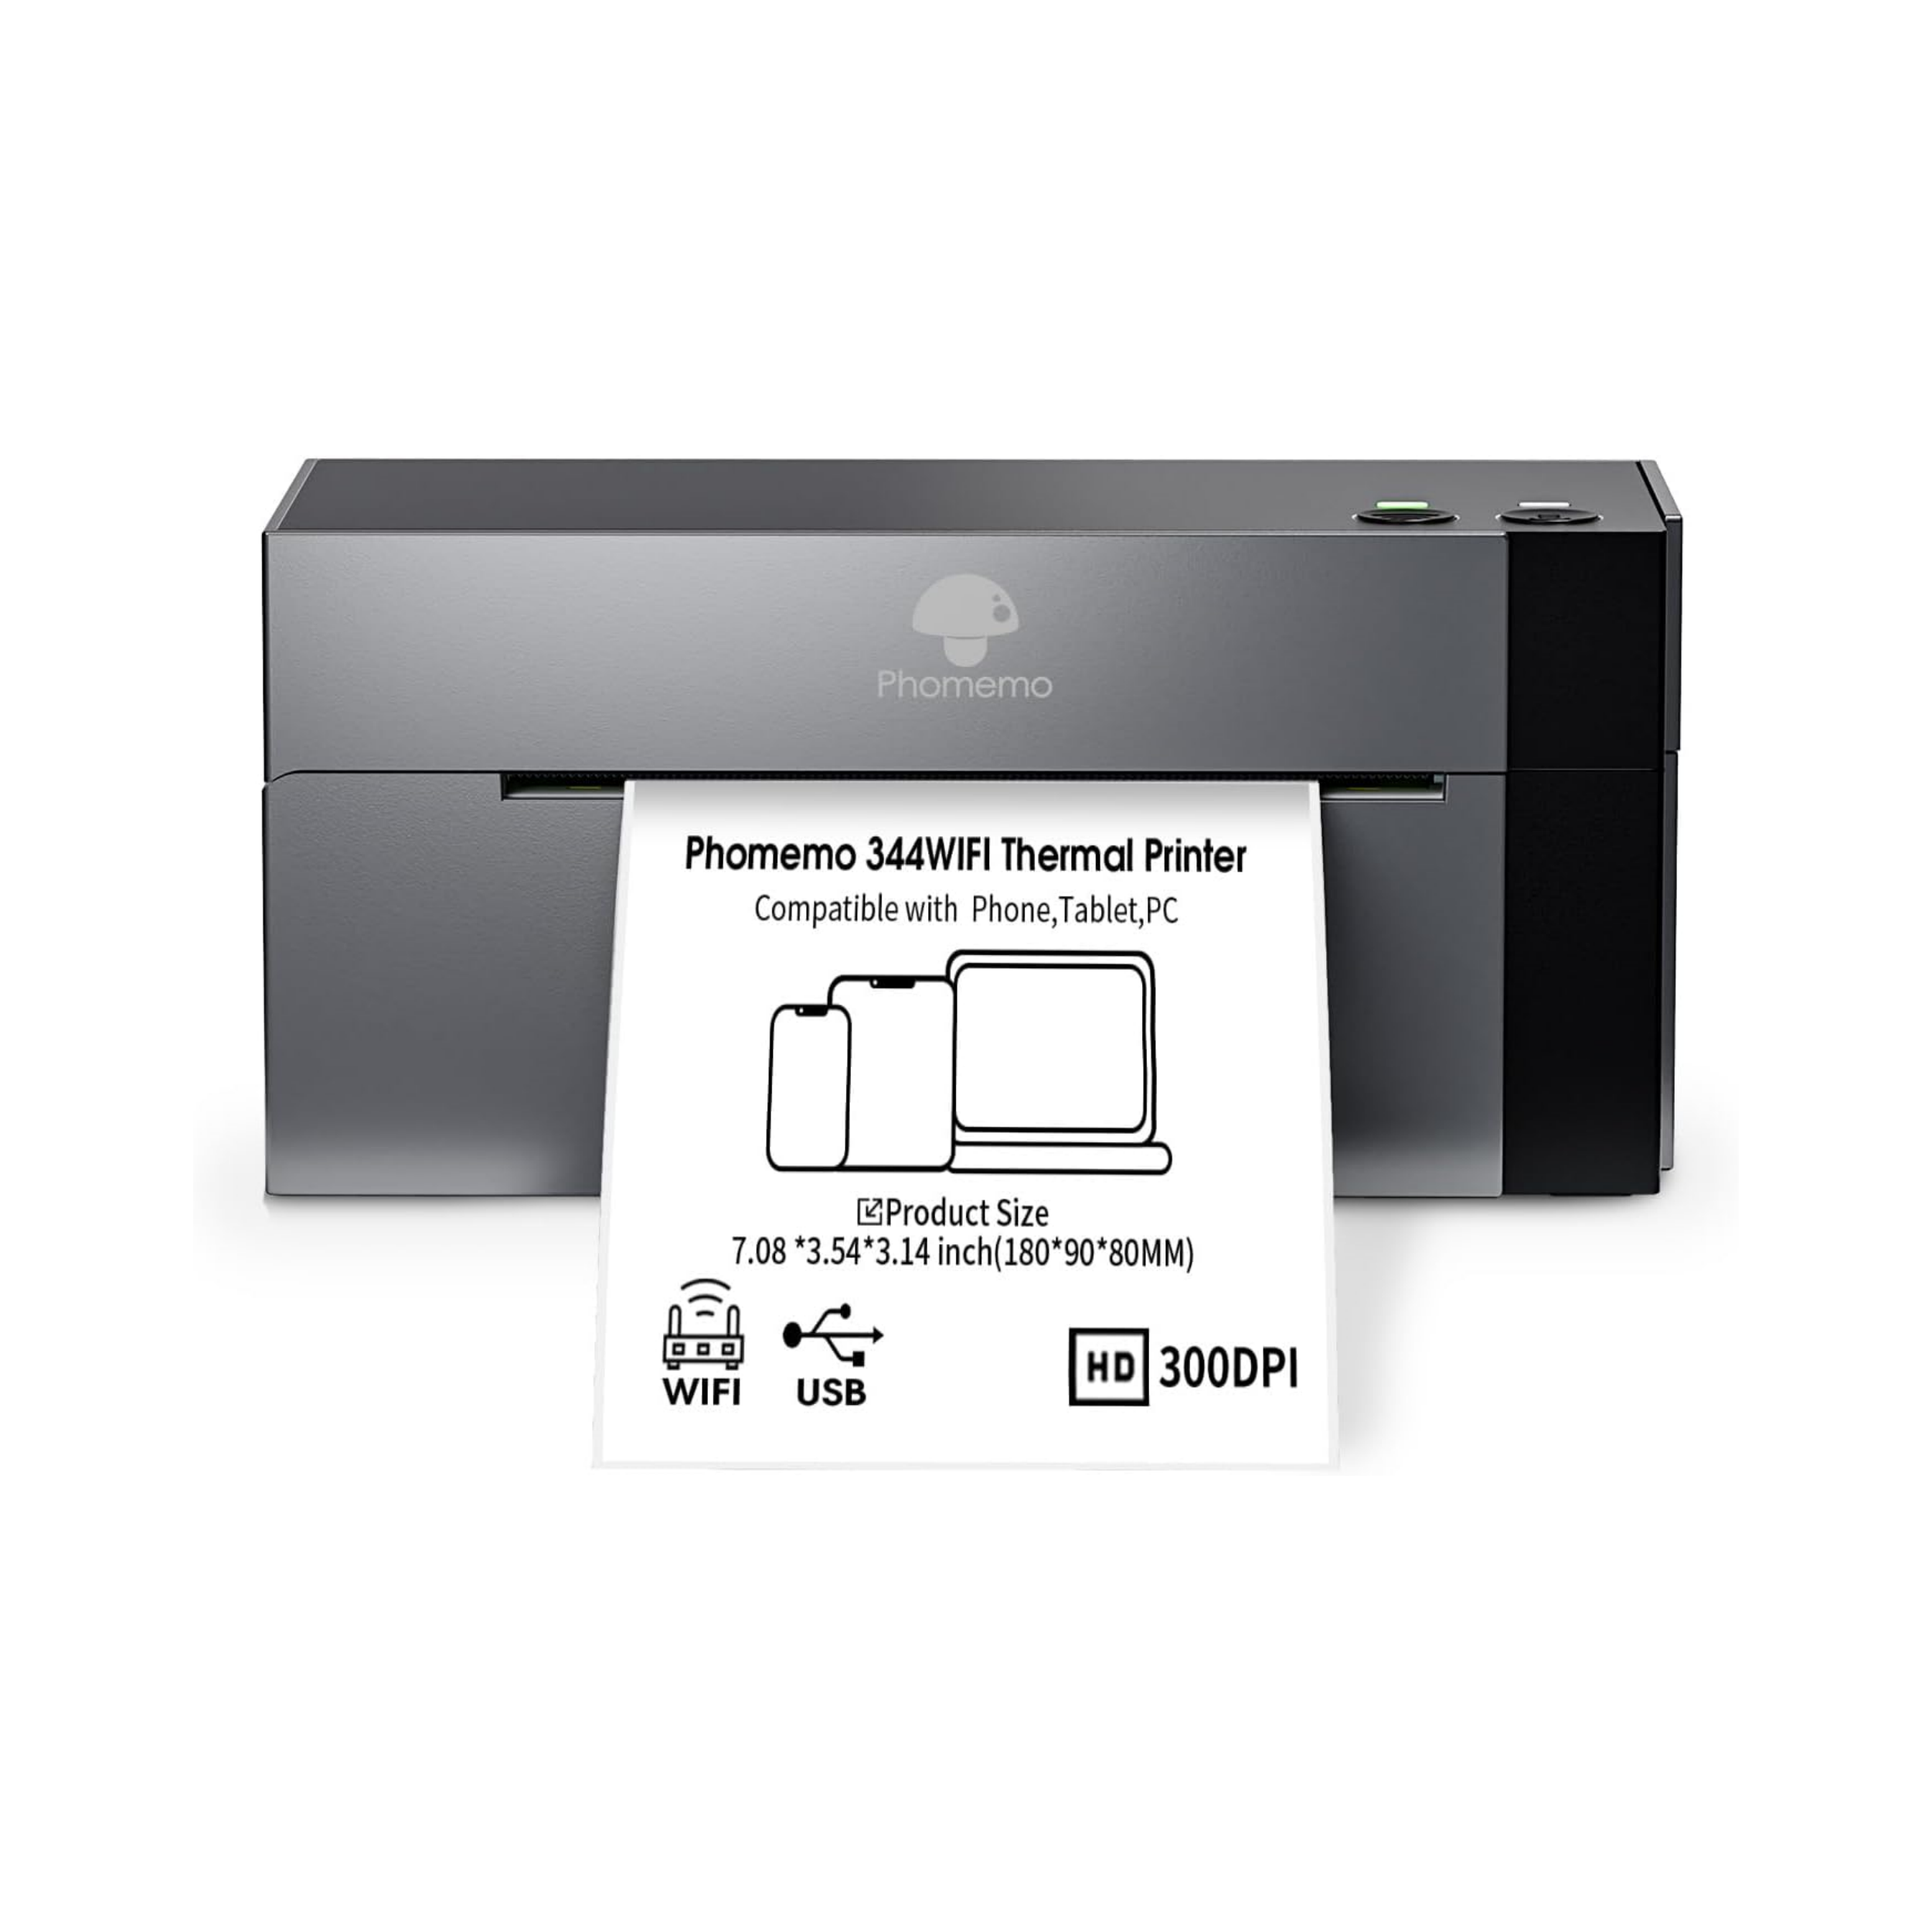 WIFI] Phomemo PM-344 300DPI Shipping Label Printer